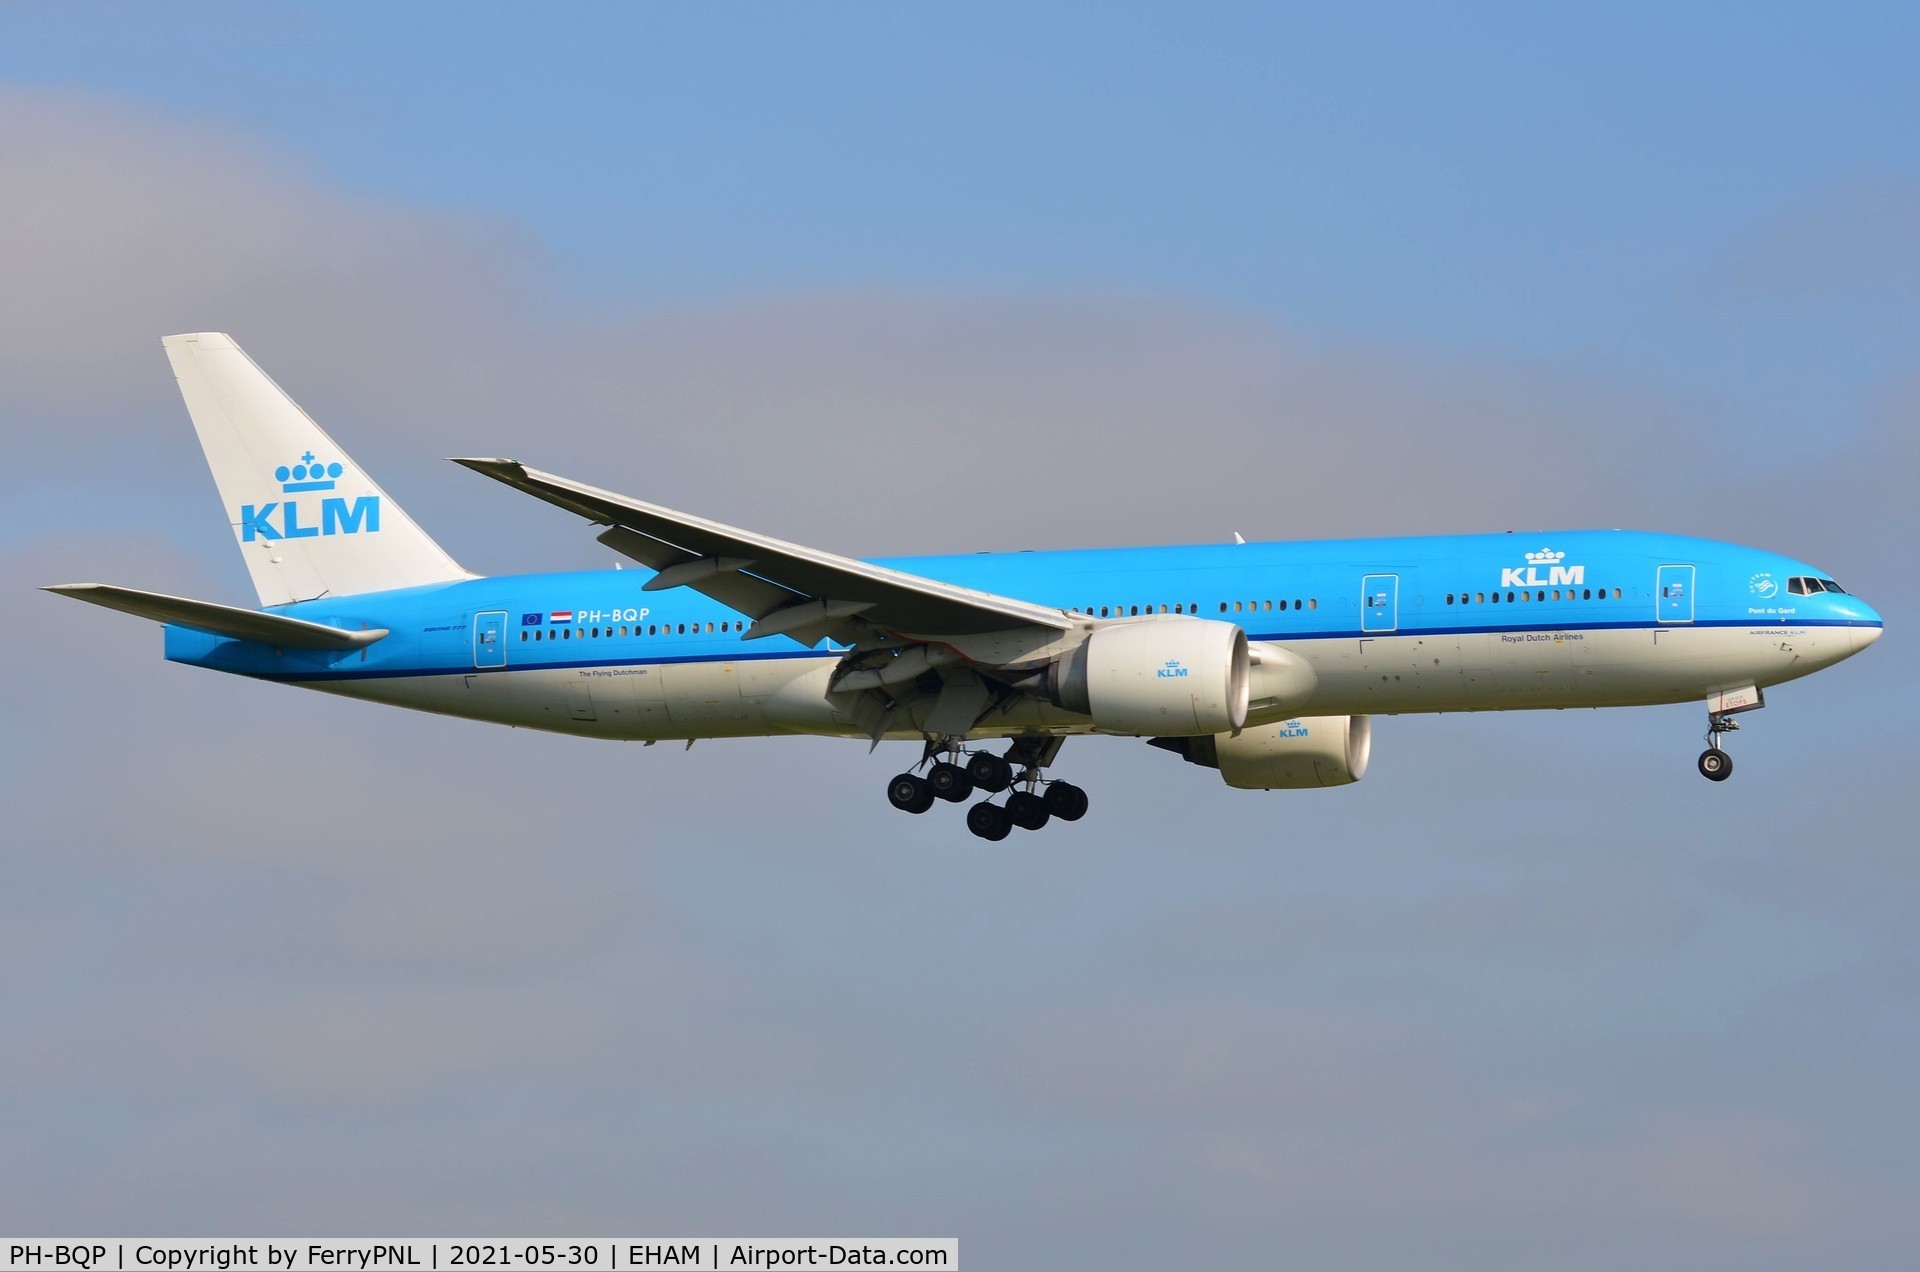 PH-BQP, 2007 Boeing 777-206/ER C/N 32721, Arrival of KLM B772